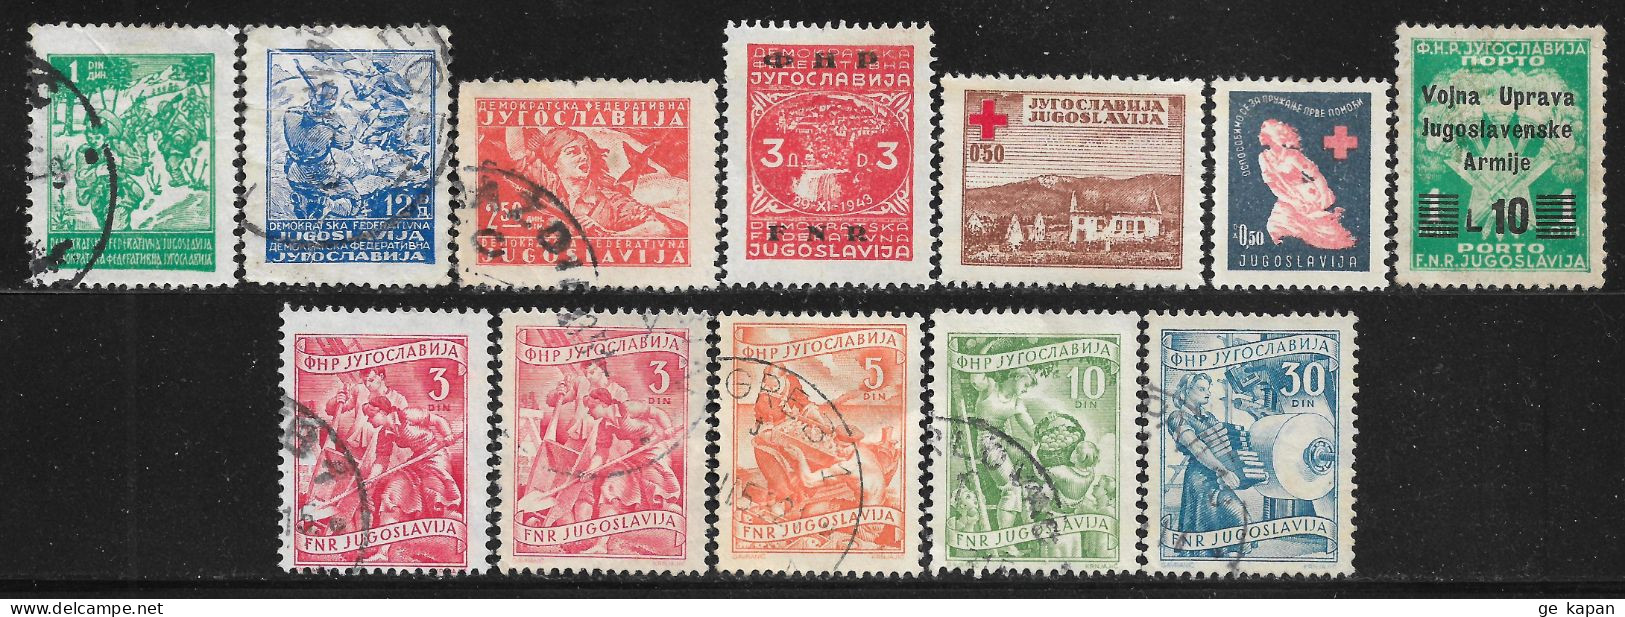 1945-1952 YUGOSLAVIA Set Of 8 Used + 4 MLH Stamps (Scott # 174,182,211,277,RA5,RA6,J23,308,345,346,350) CV $3.00 - Usados